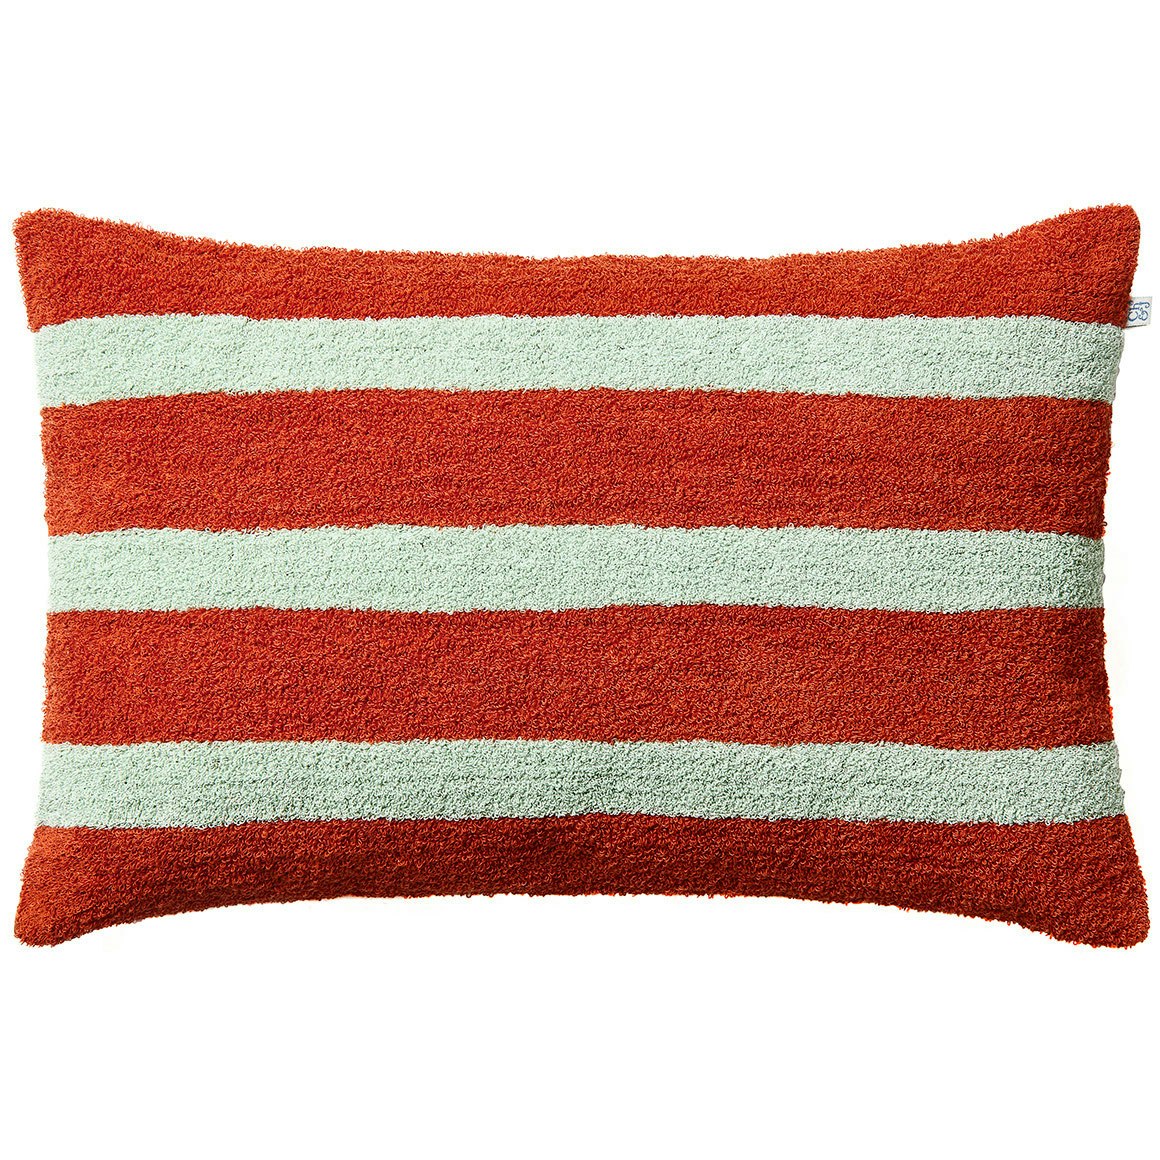 Stripe Cushion Cover 40x60 cm, Apricot Orange / Aqua